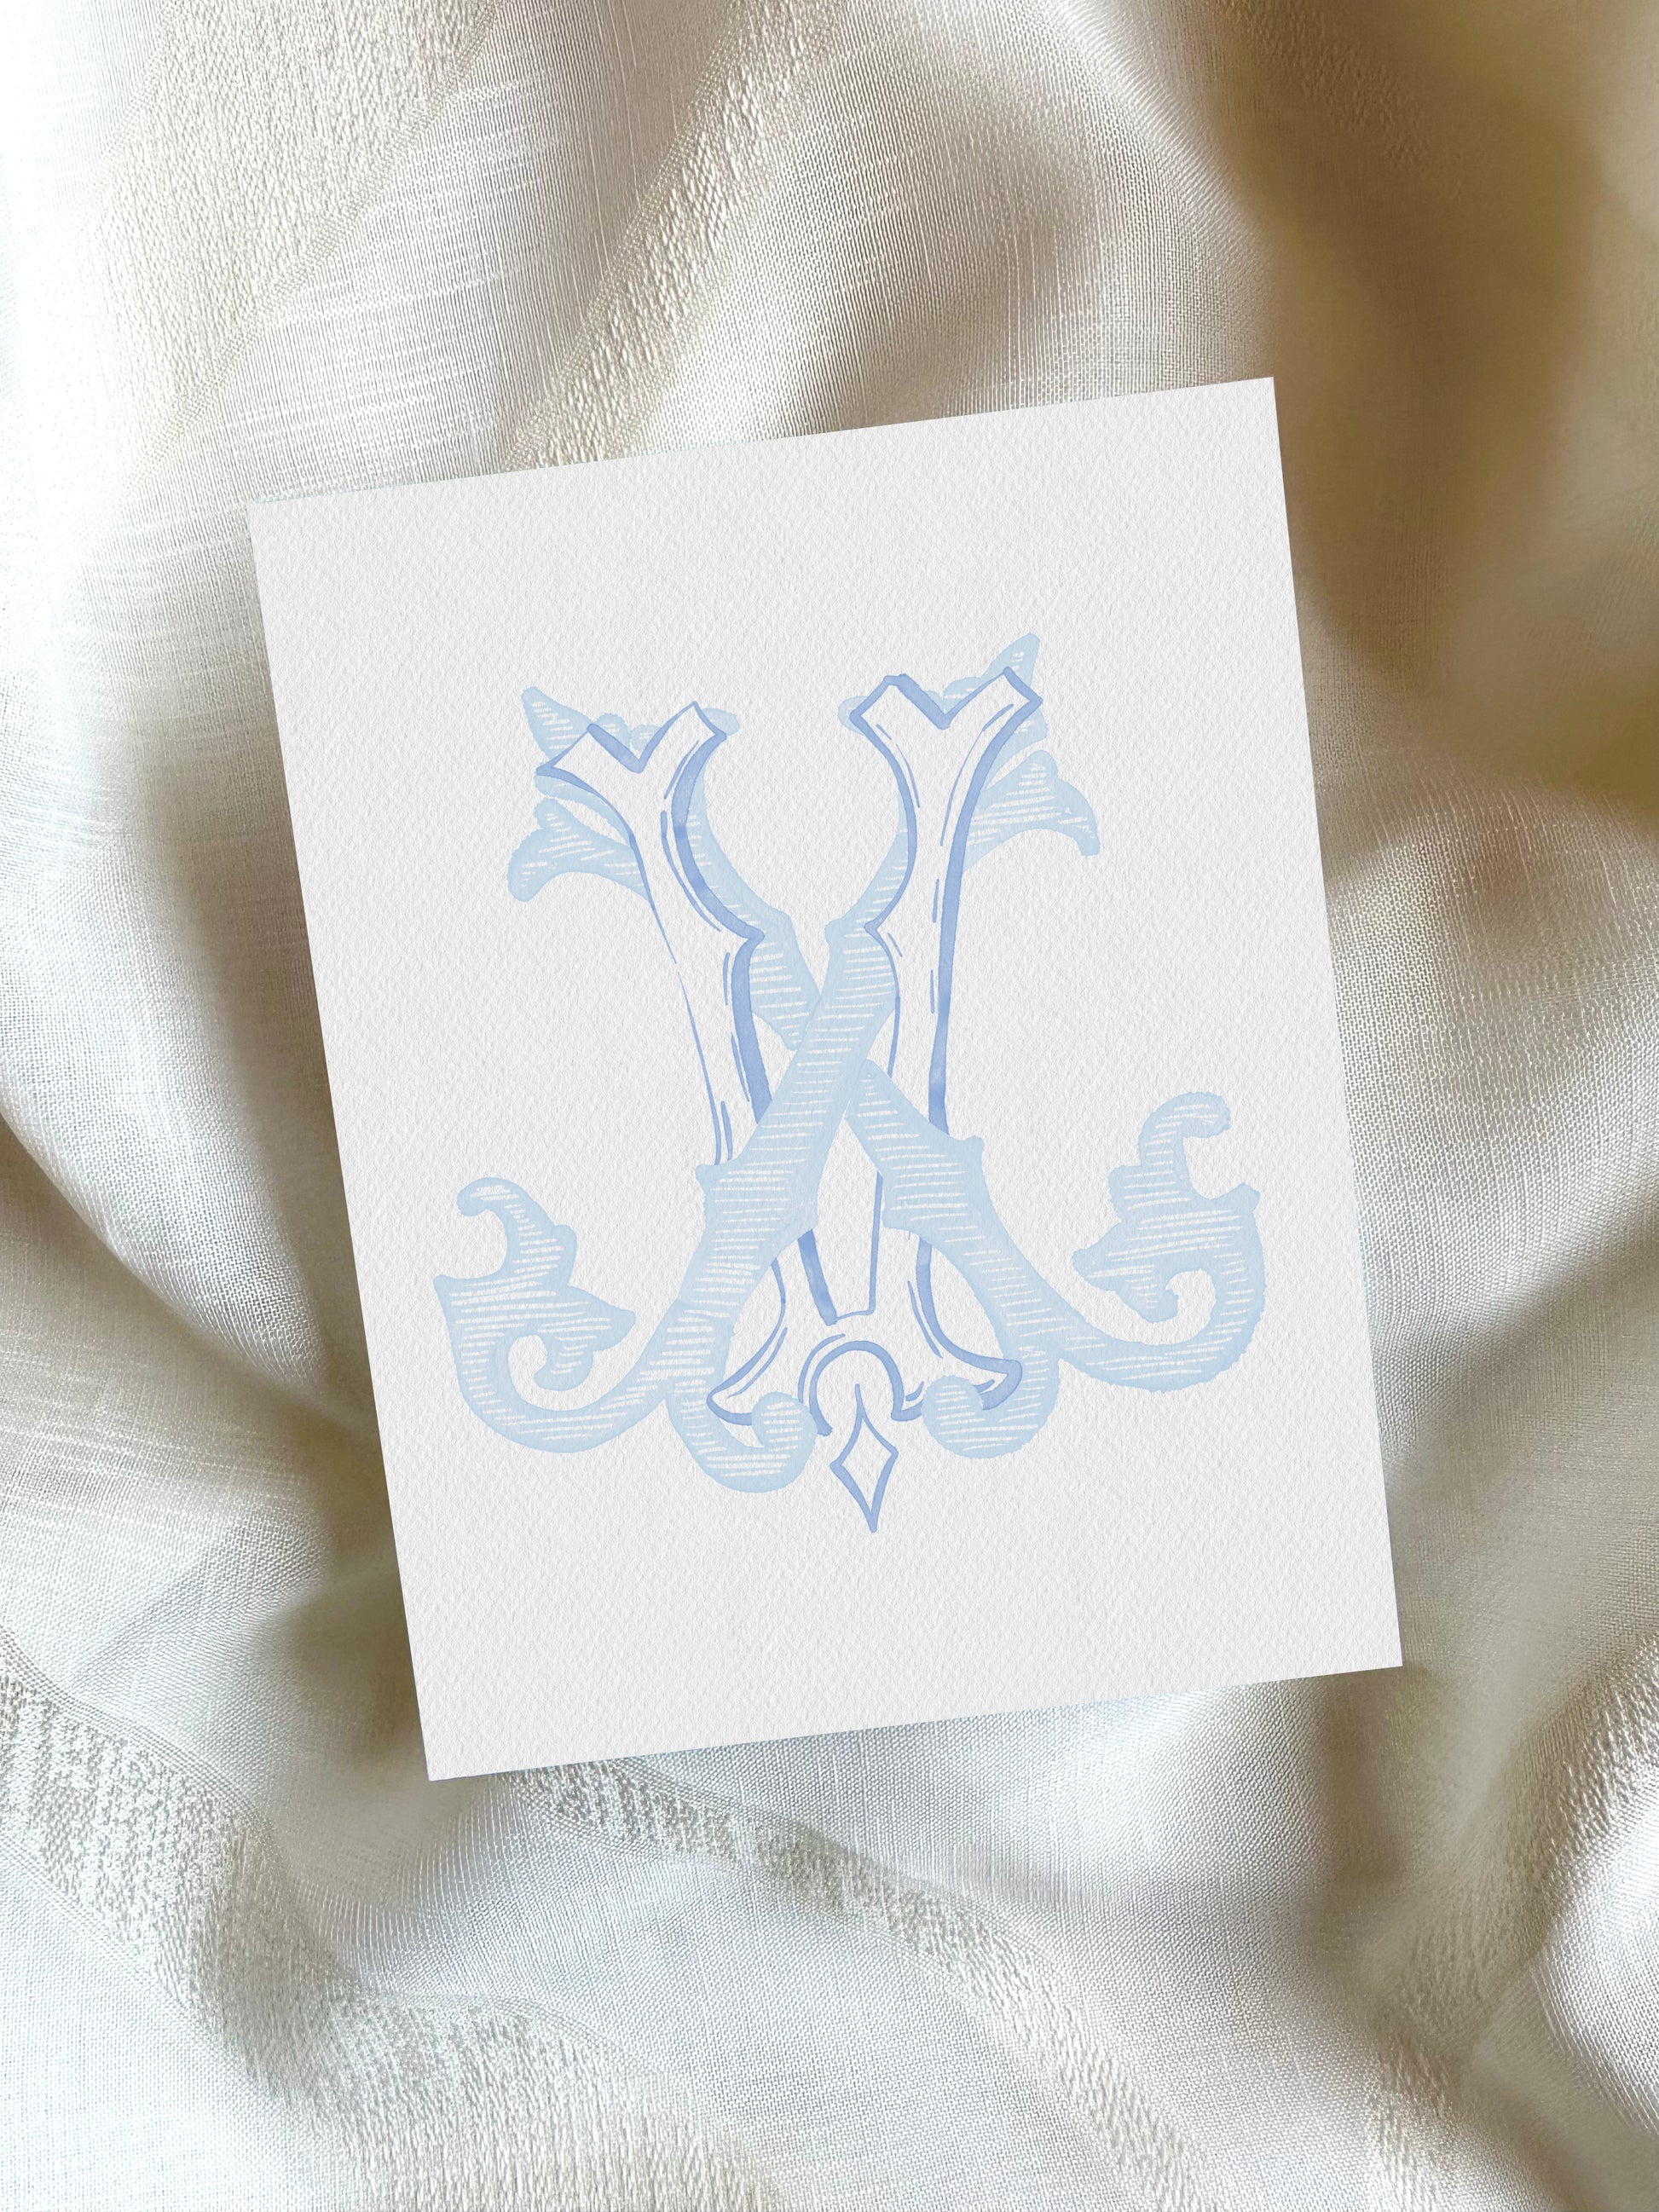 2 Letter Monogram with Letters XV VX | Digital Download - Wedding Monogram SVG, Personal Logo, Wedding Logo for Wedding Invitations The Wedding Crest Lab